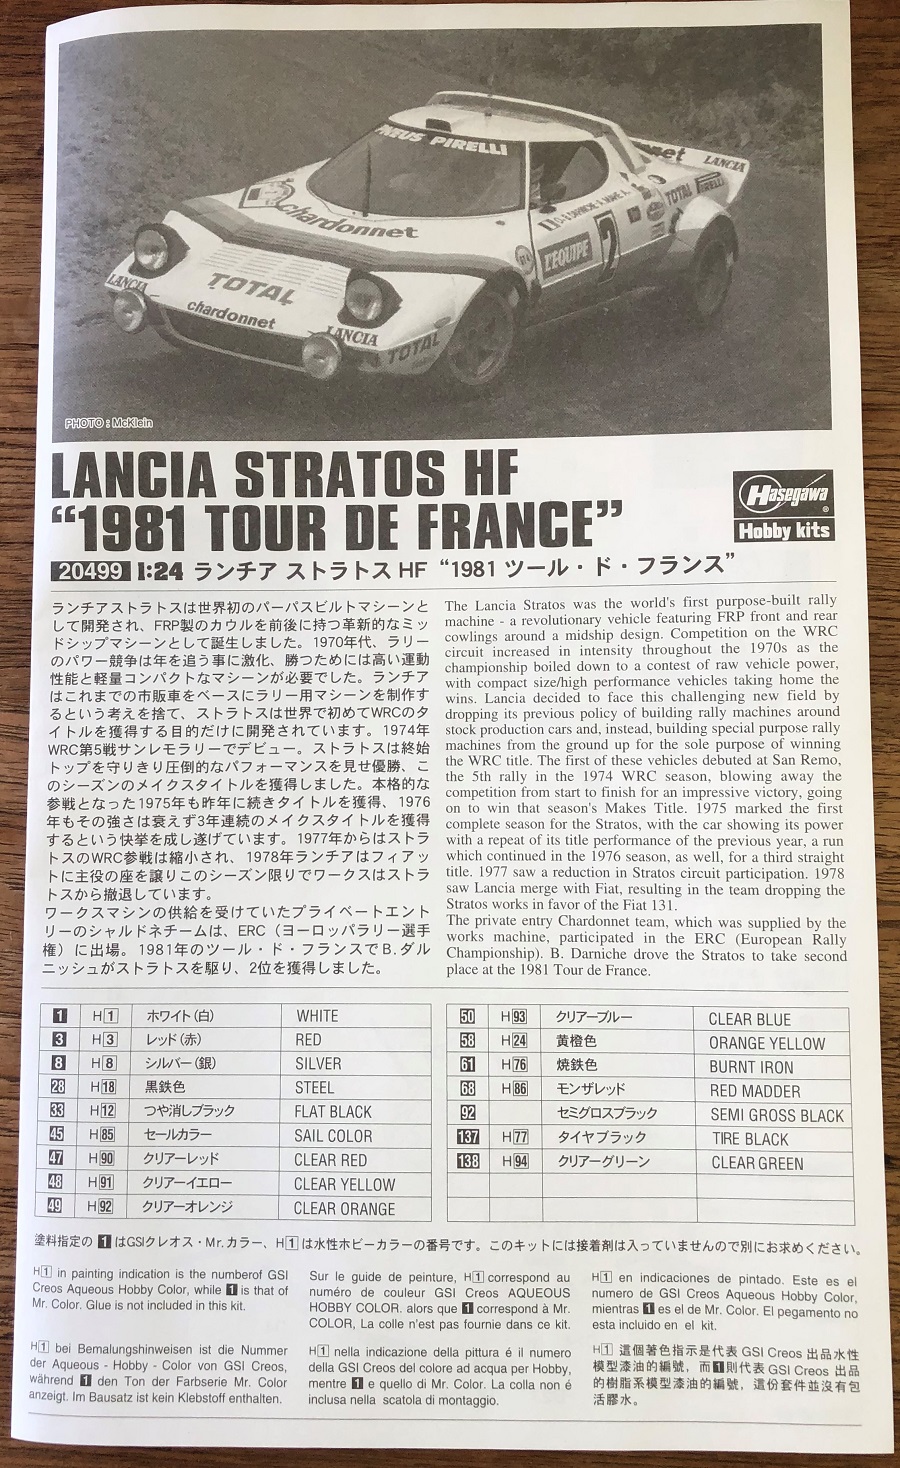 Concours Lancia Stratos HF Tour de France 1981 Notice13